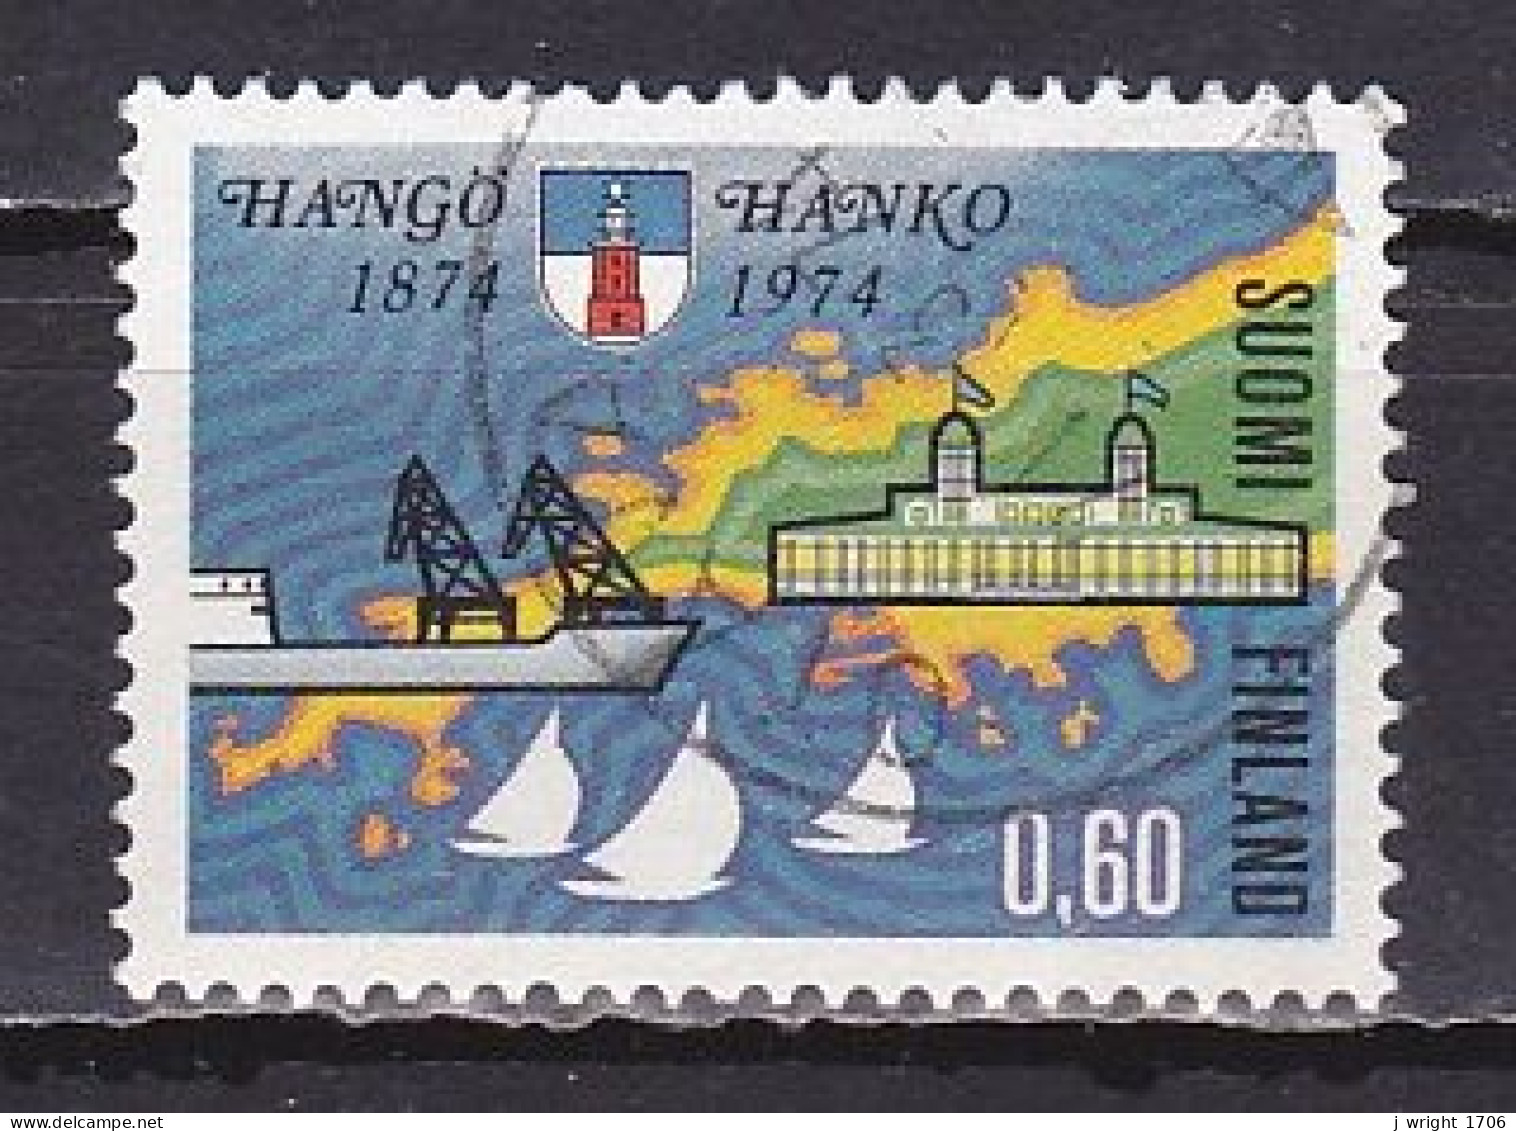 Finland, 1974, Hanko/Hangö Centenary, 0.60mk, USED - Oblitérés